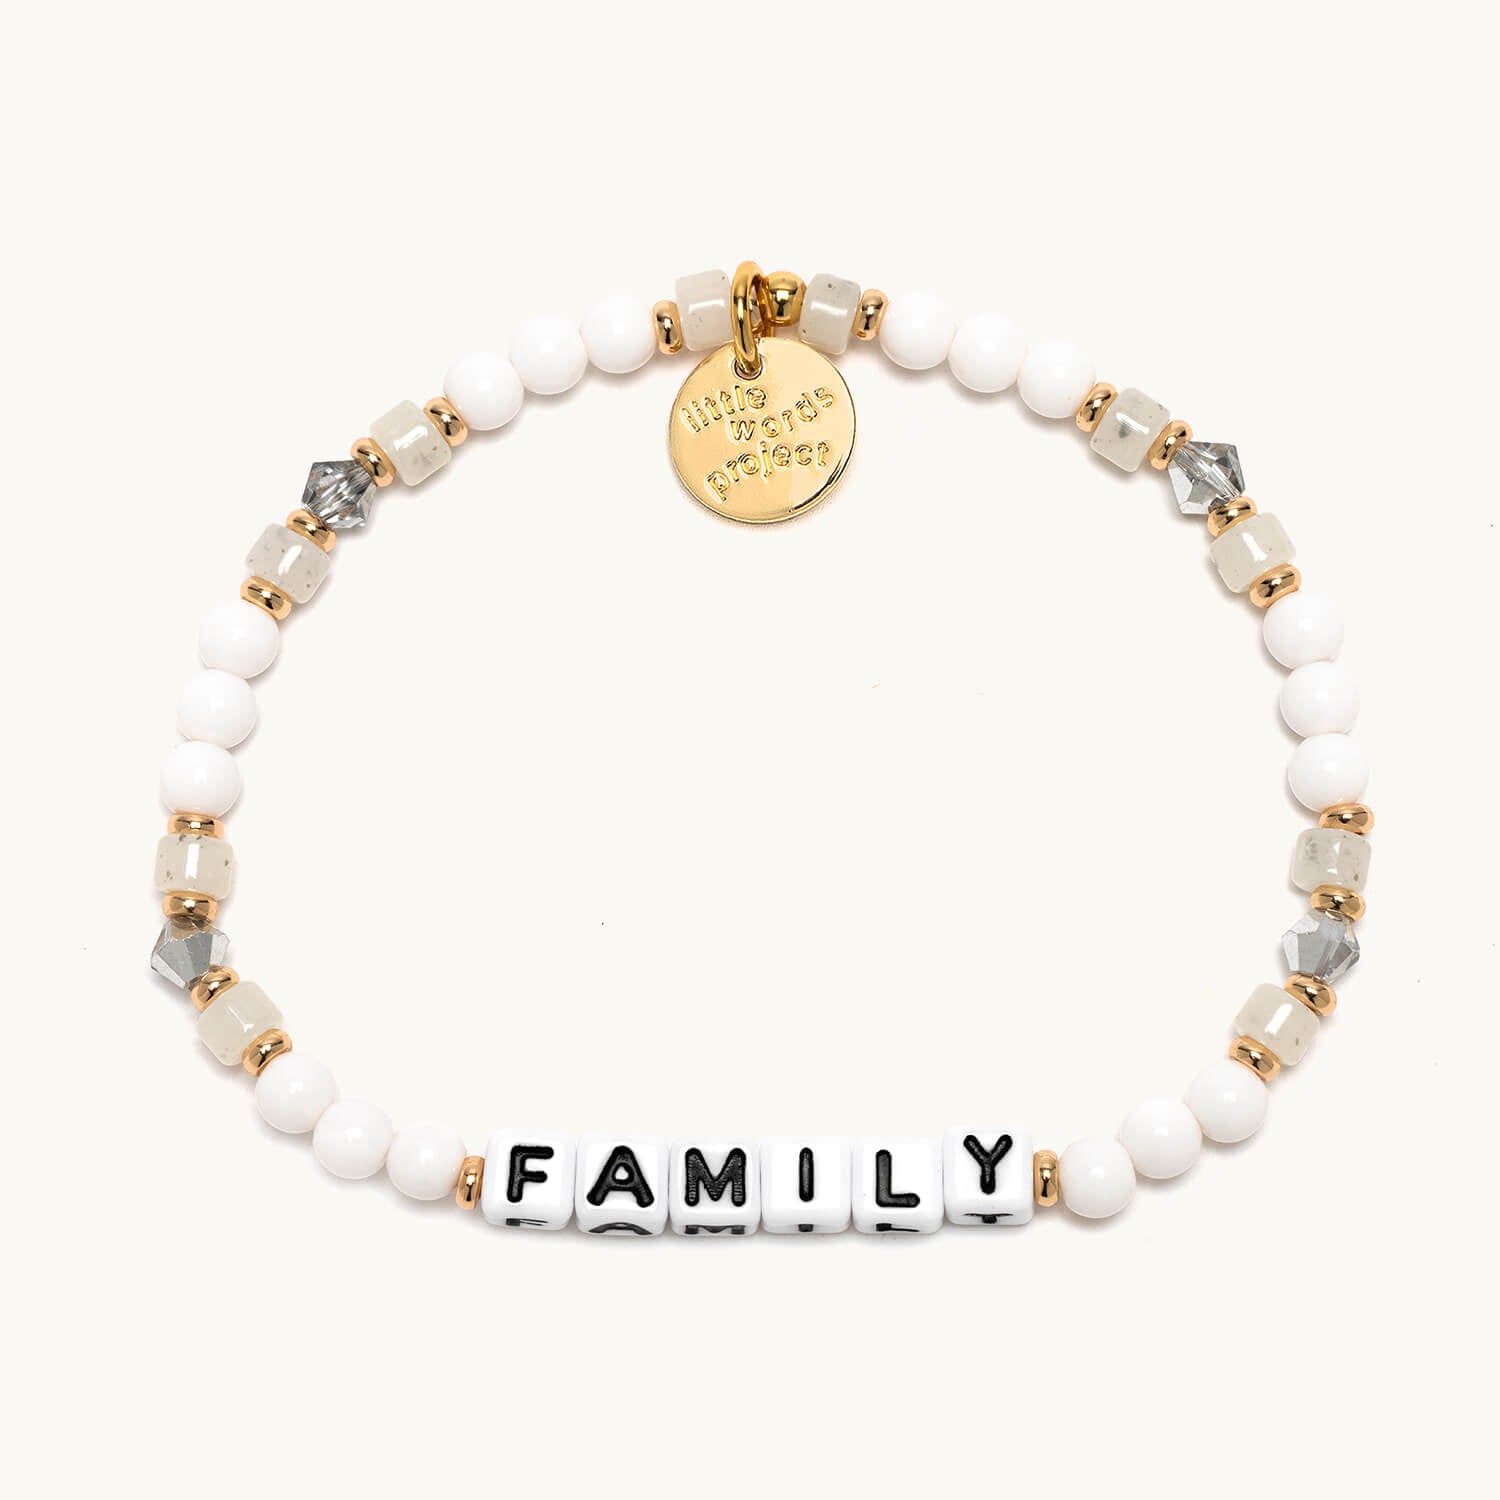 Family- Family Little Words Project Bracelet